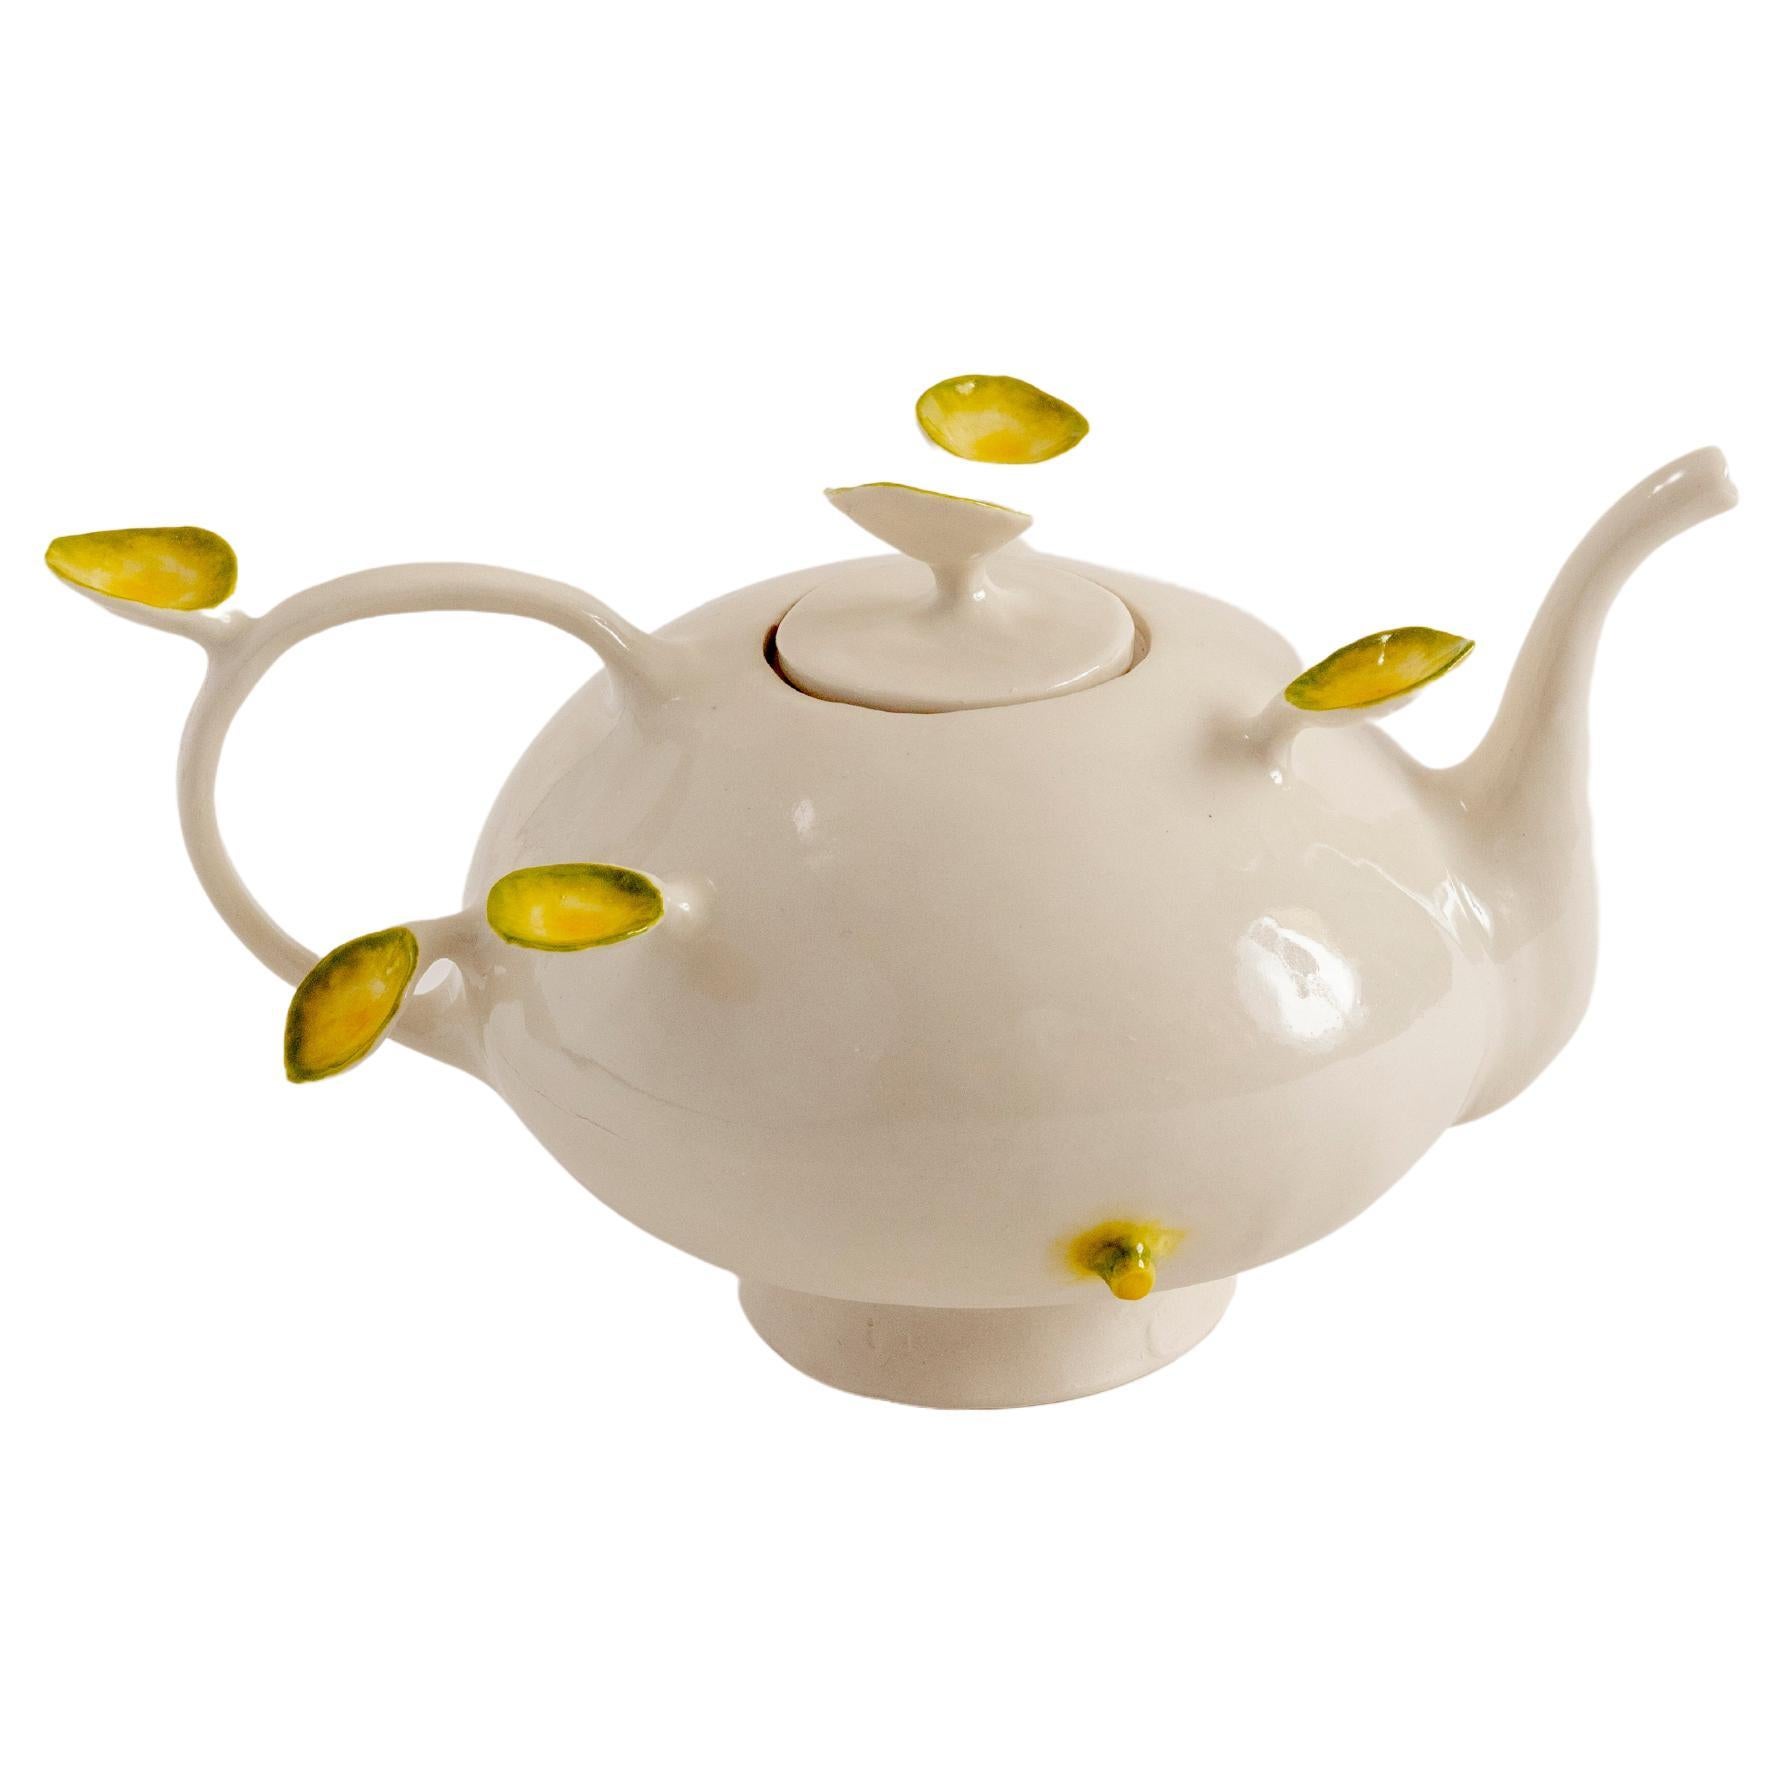 Isabel Rower, Ceramic Teapot, Unique Whimsical Teapot